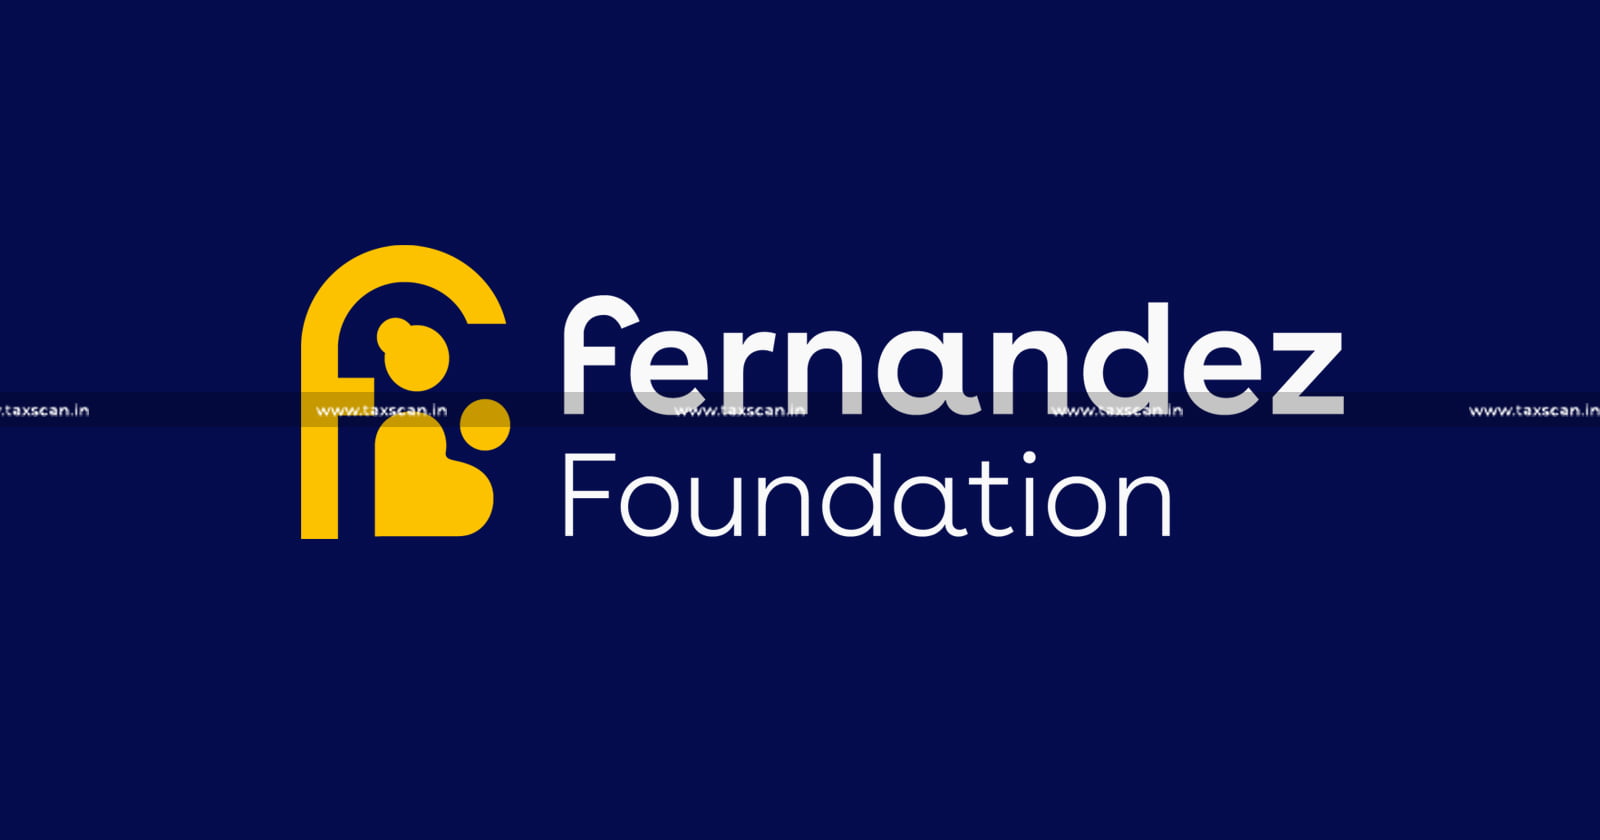 ITAT - Income Tax Exemptions - Fernandez Foundation - Income Tax Exemptions to Fernandez Foundation - taxscan